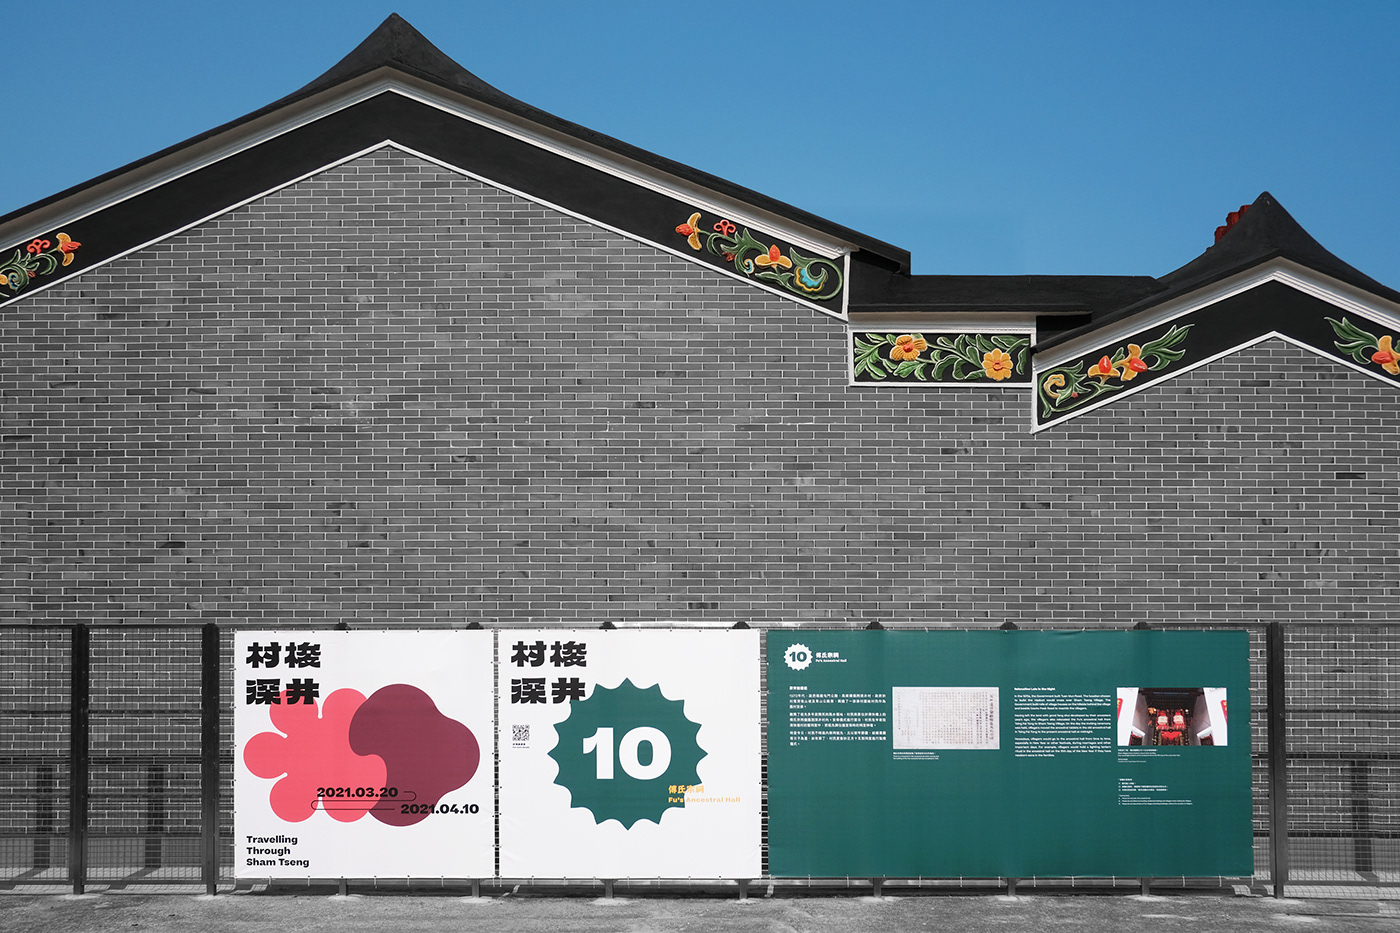 Chinese typography community design environmental graphic Exhibition Design  festival flag design pengguin sham tseng visual identity 村梭深井